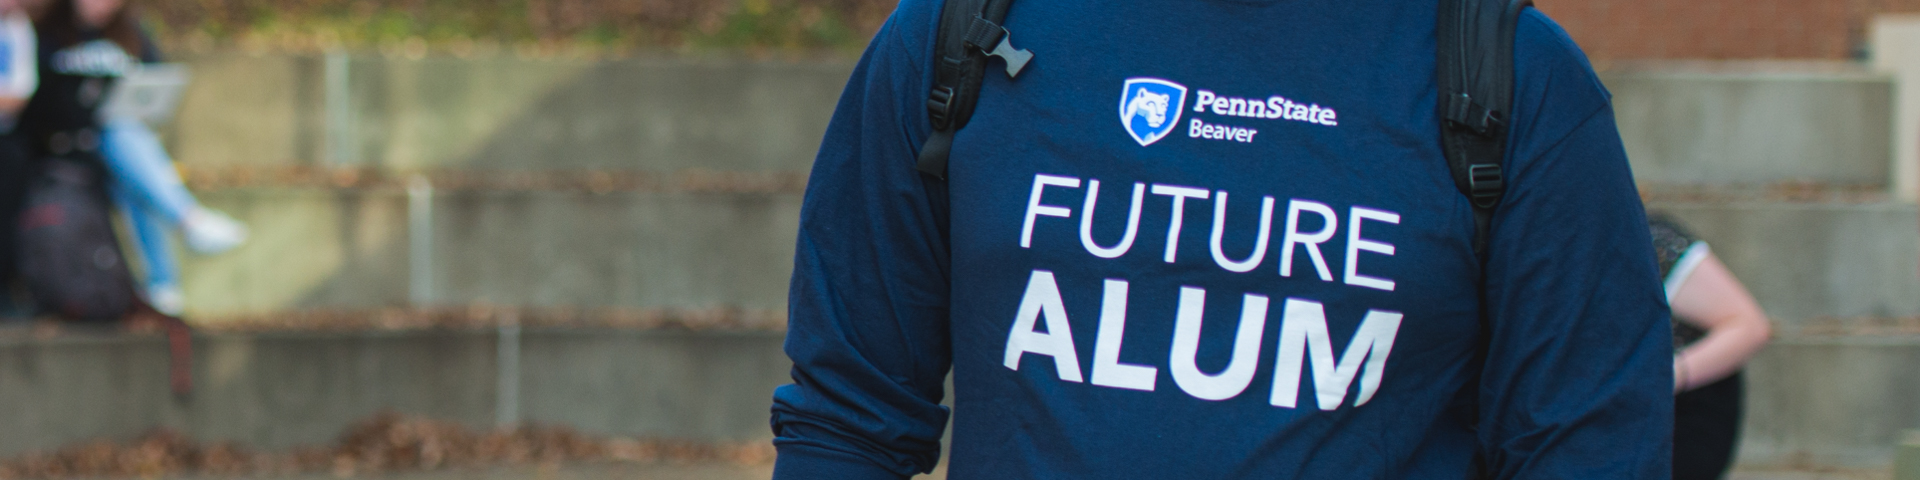 close up of t-shirt that says Penn State Beaver Future Alum